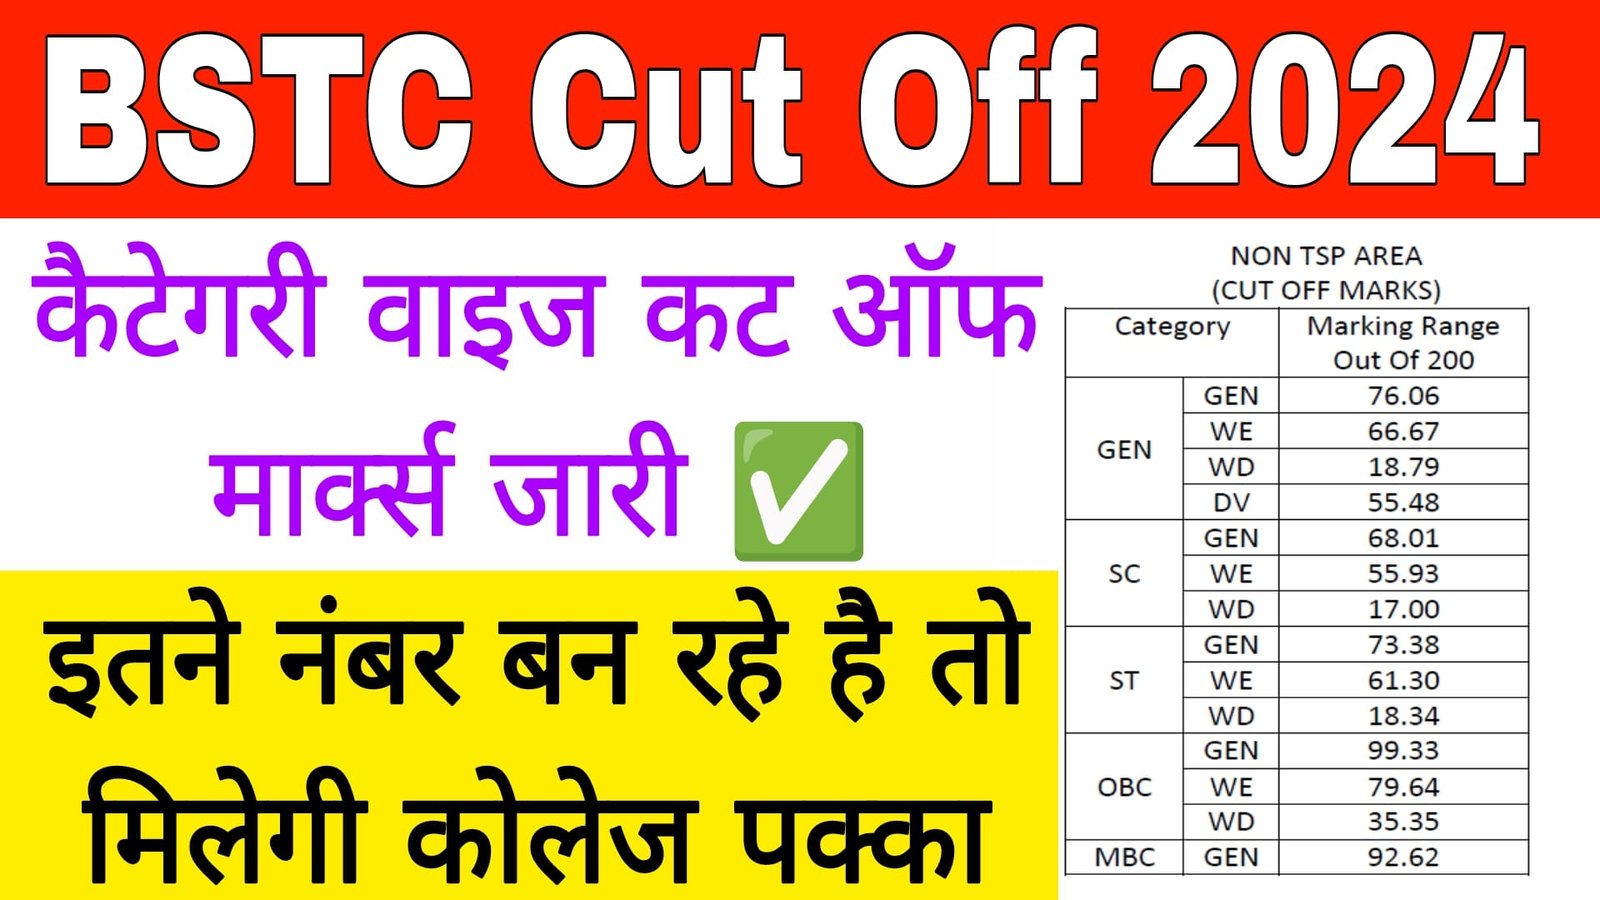 Rajasthan BSTC Cut Off